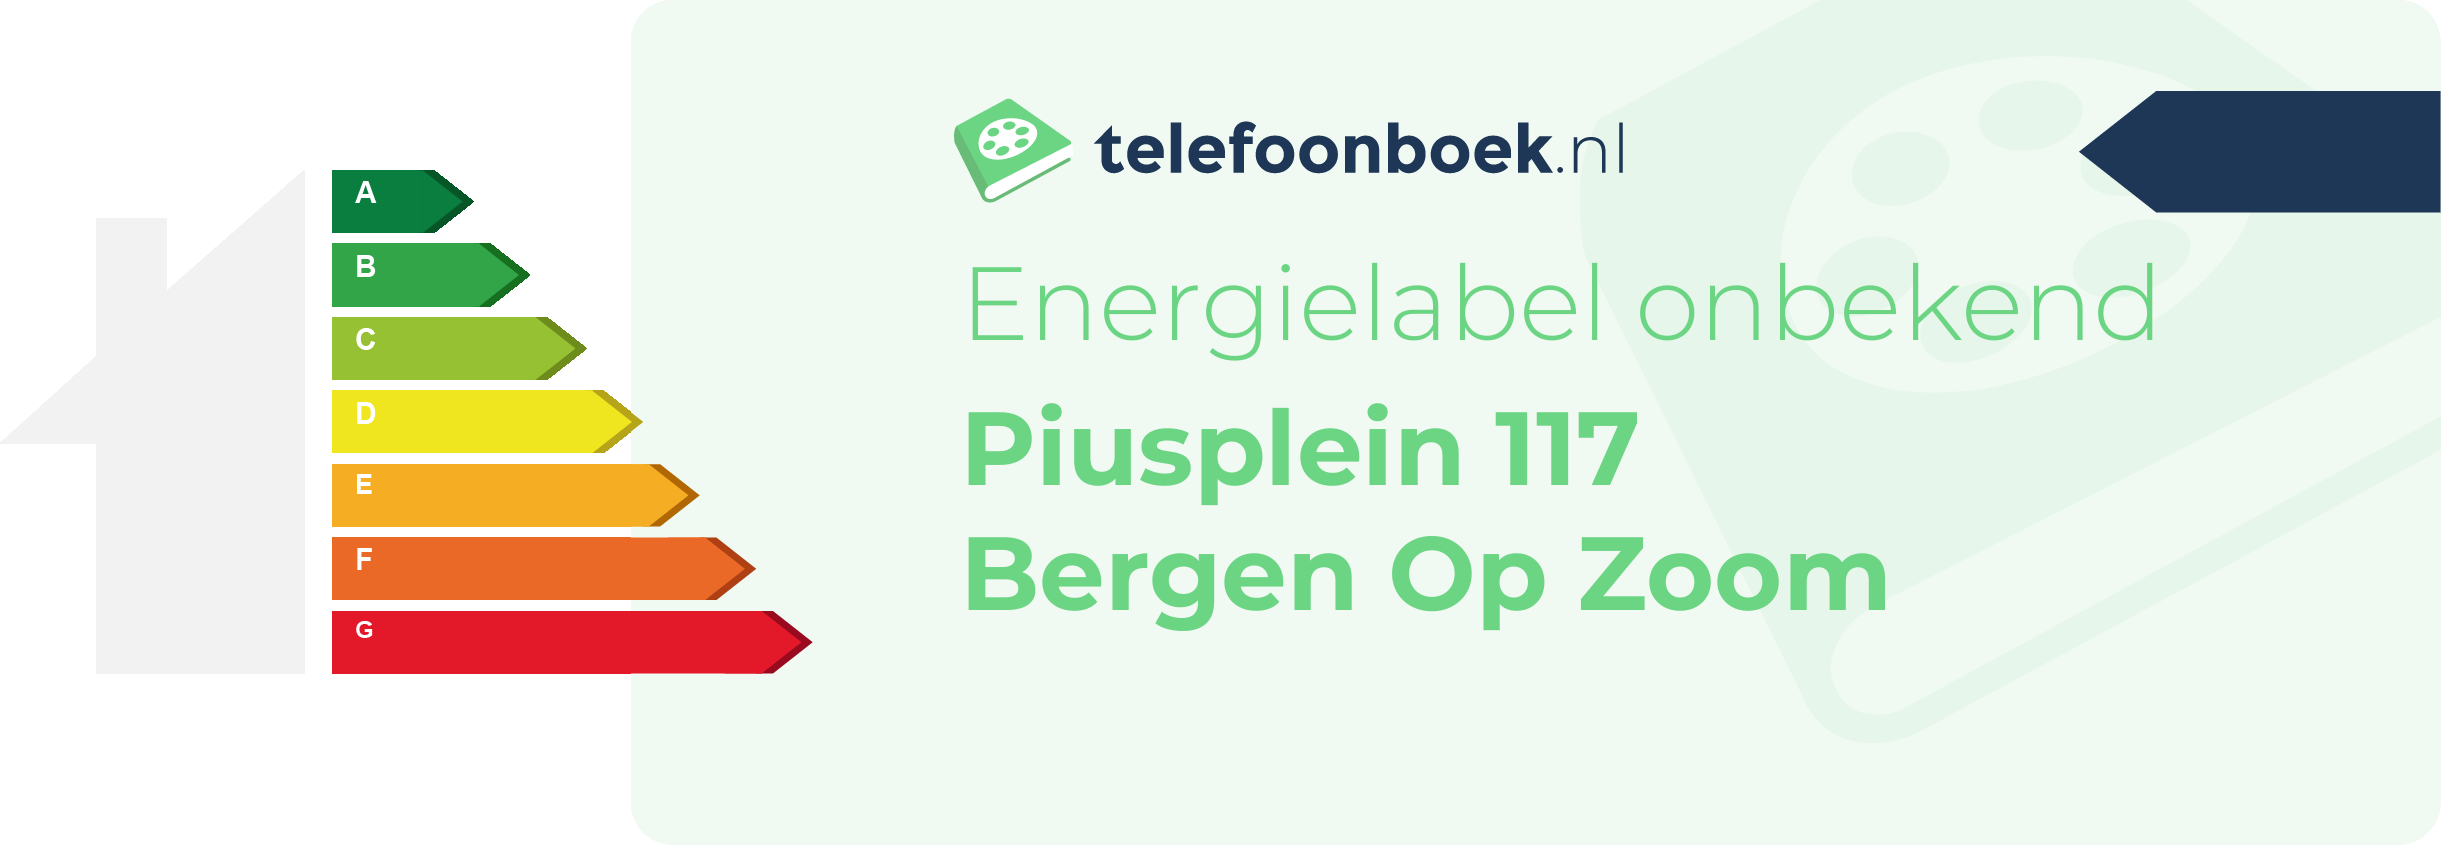 Energielabel Piusplein 117 Bergen Op Zoom